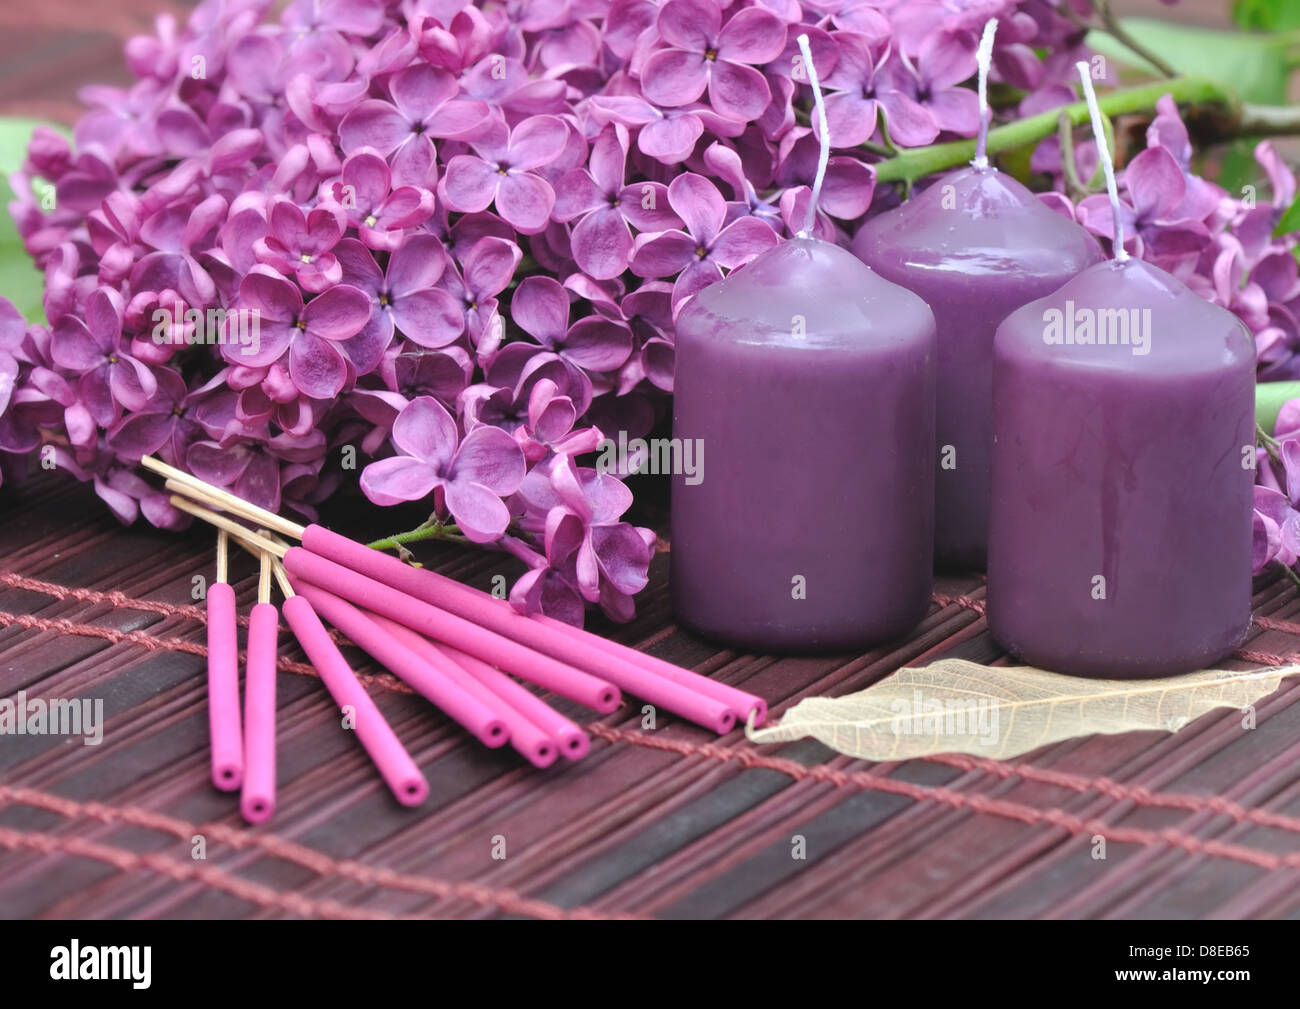 Decorado con flores de color lila púrpura, velas e incienso para relajarse  Fotografía de stock - Alamy